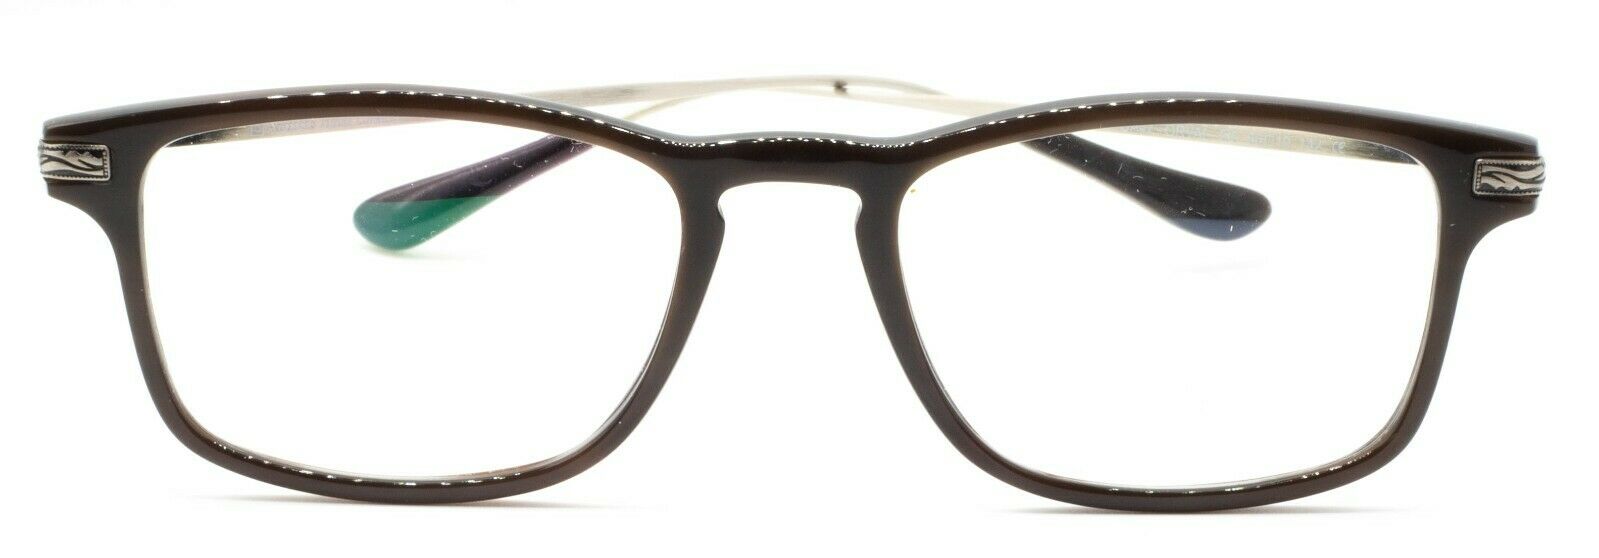 ACUITIS GA47-ORVAL 5/5 50mm Glasses RX Optical Eyeglasses Eyewear New - TRUSTED